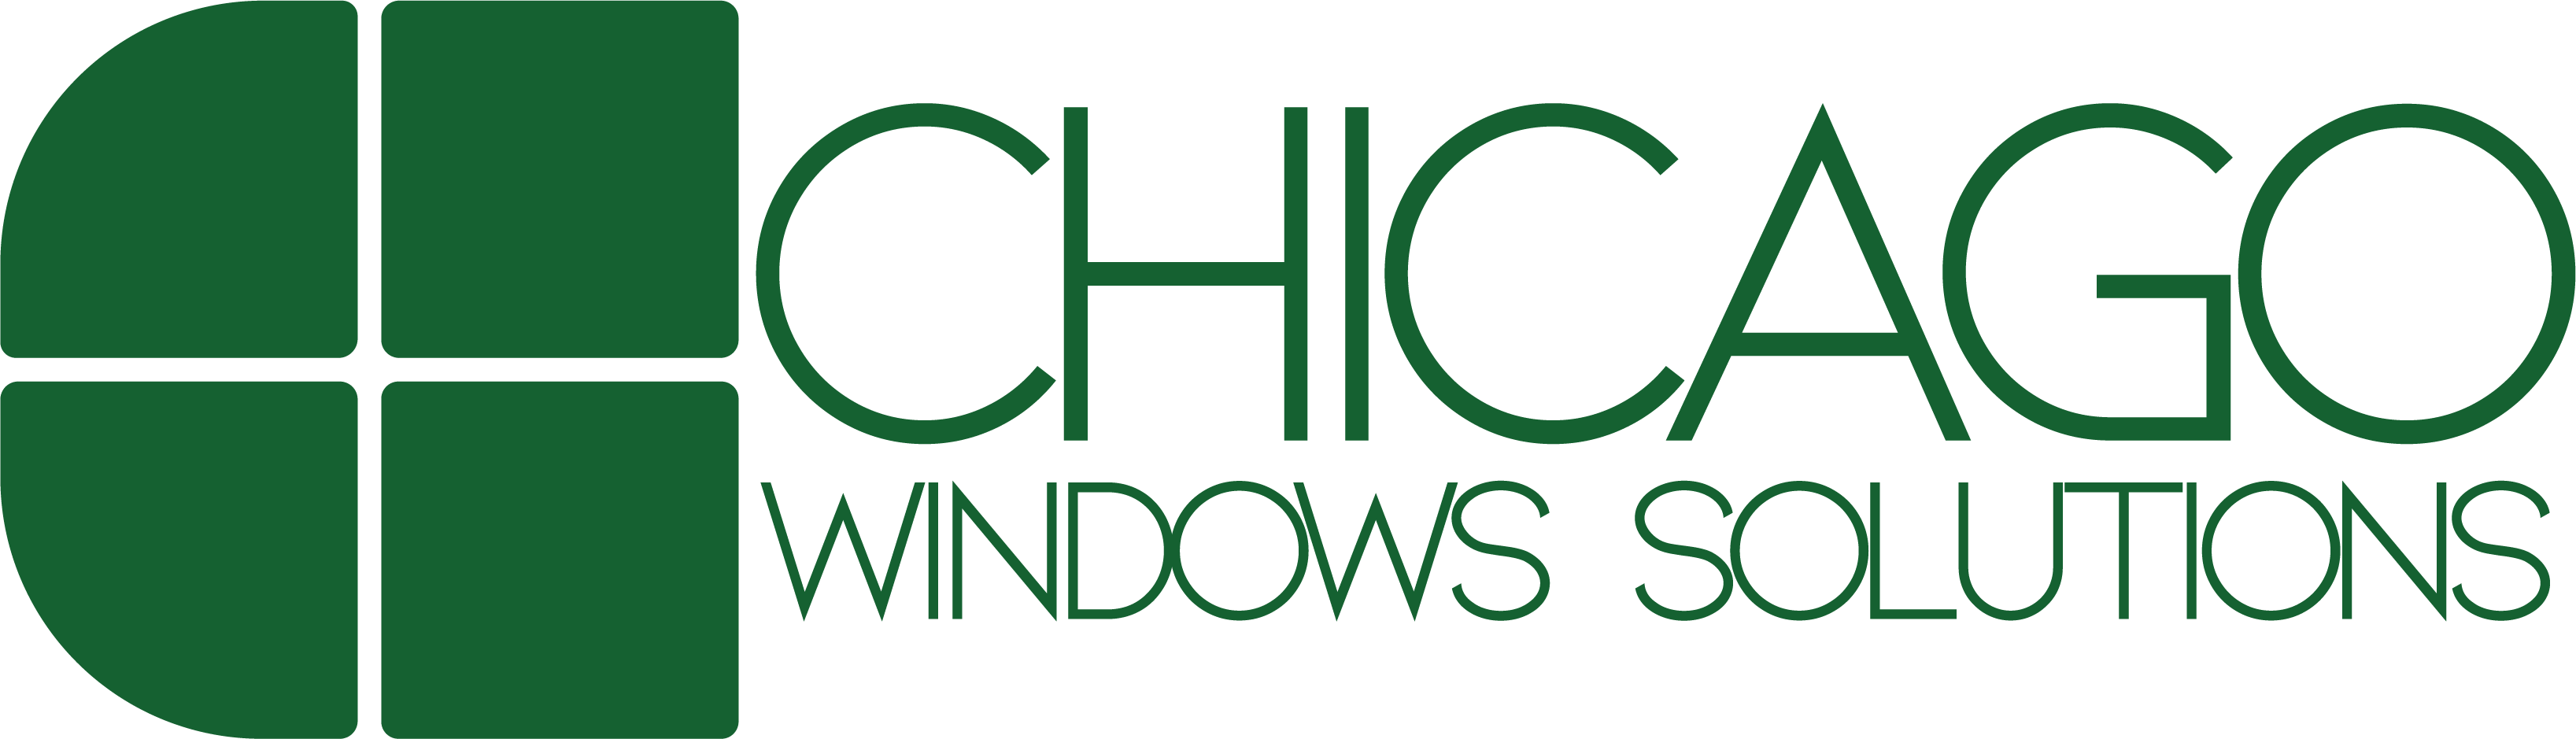 Chicago Windows Solutions, Corp. Logo